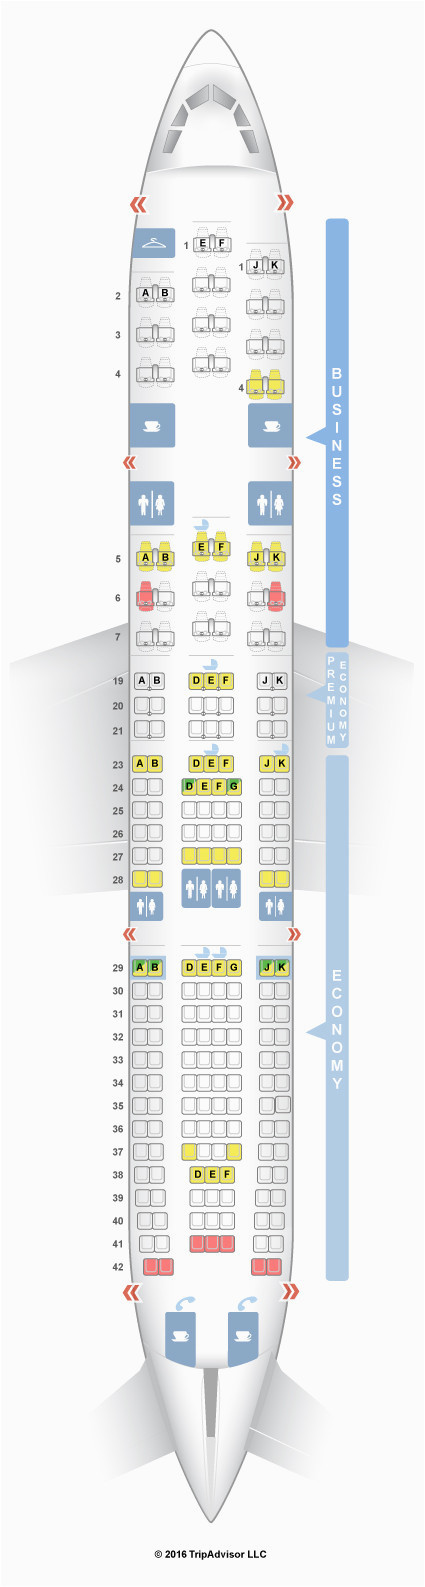 air canada seating chart elegant seatguru seat map air transat